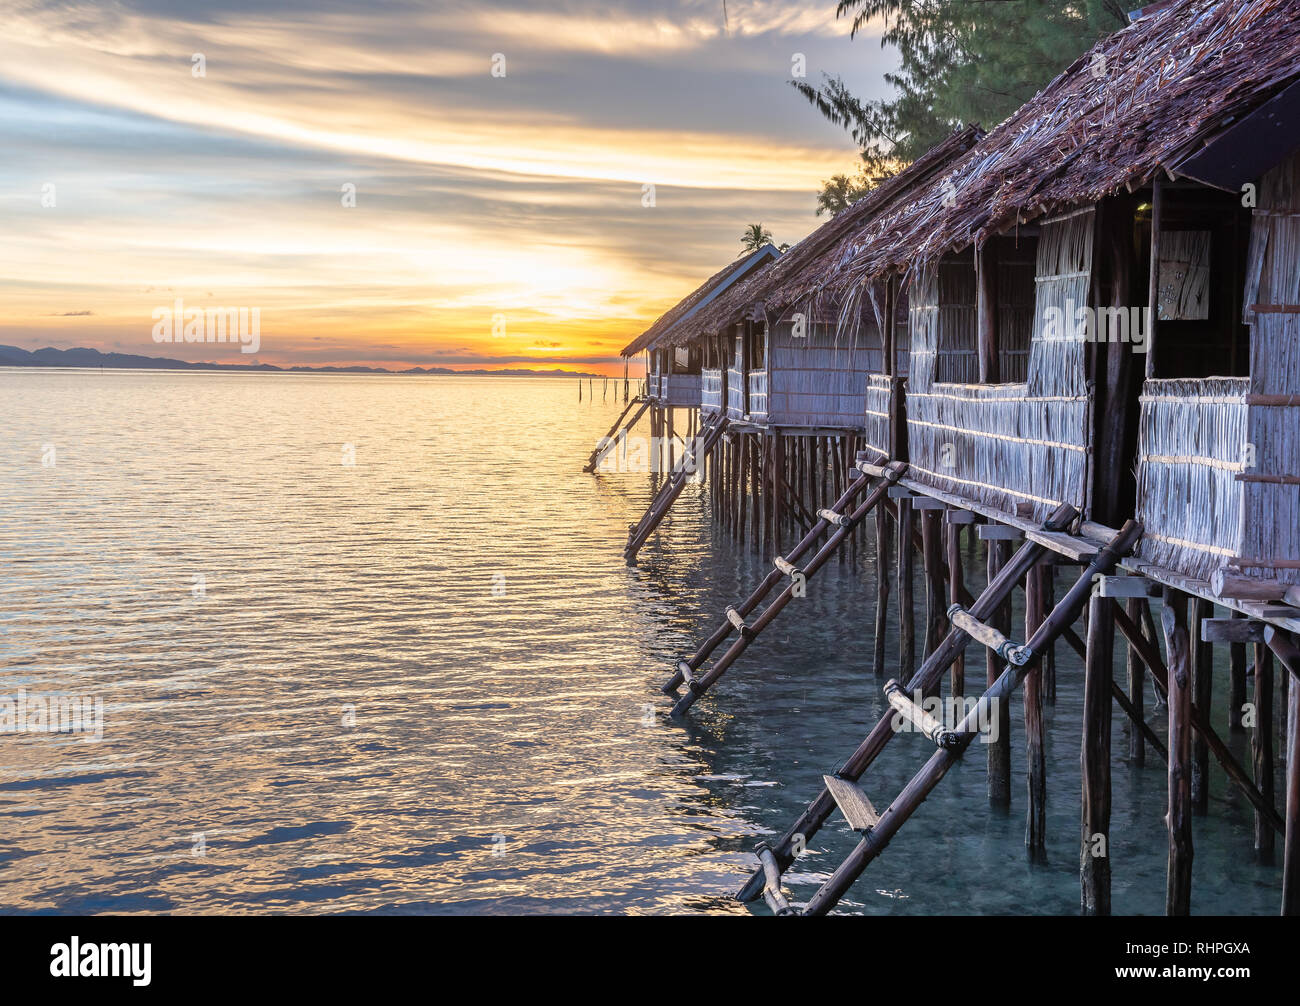 Kri Eco Resort on the Raja Ampat Islands Indonesia Stock Photo